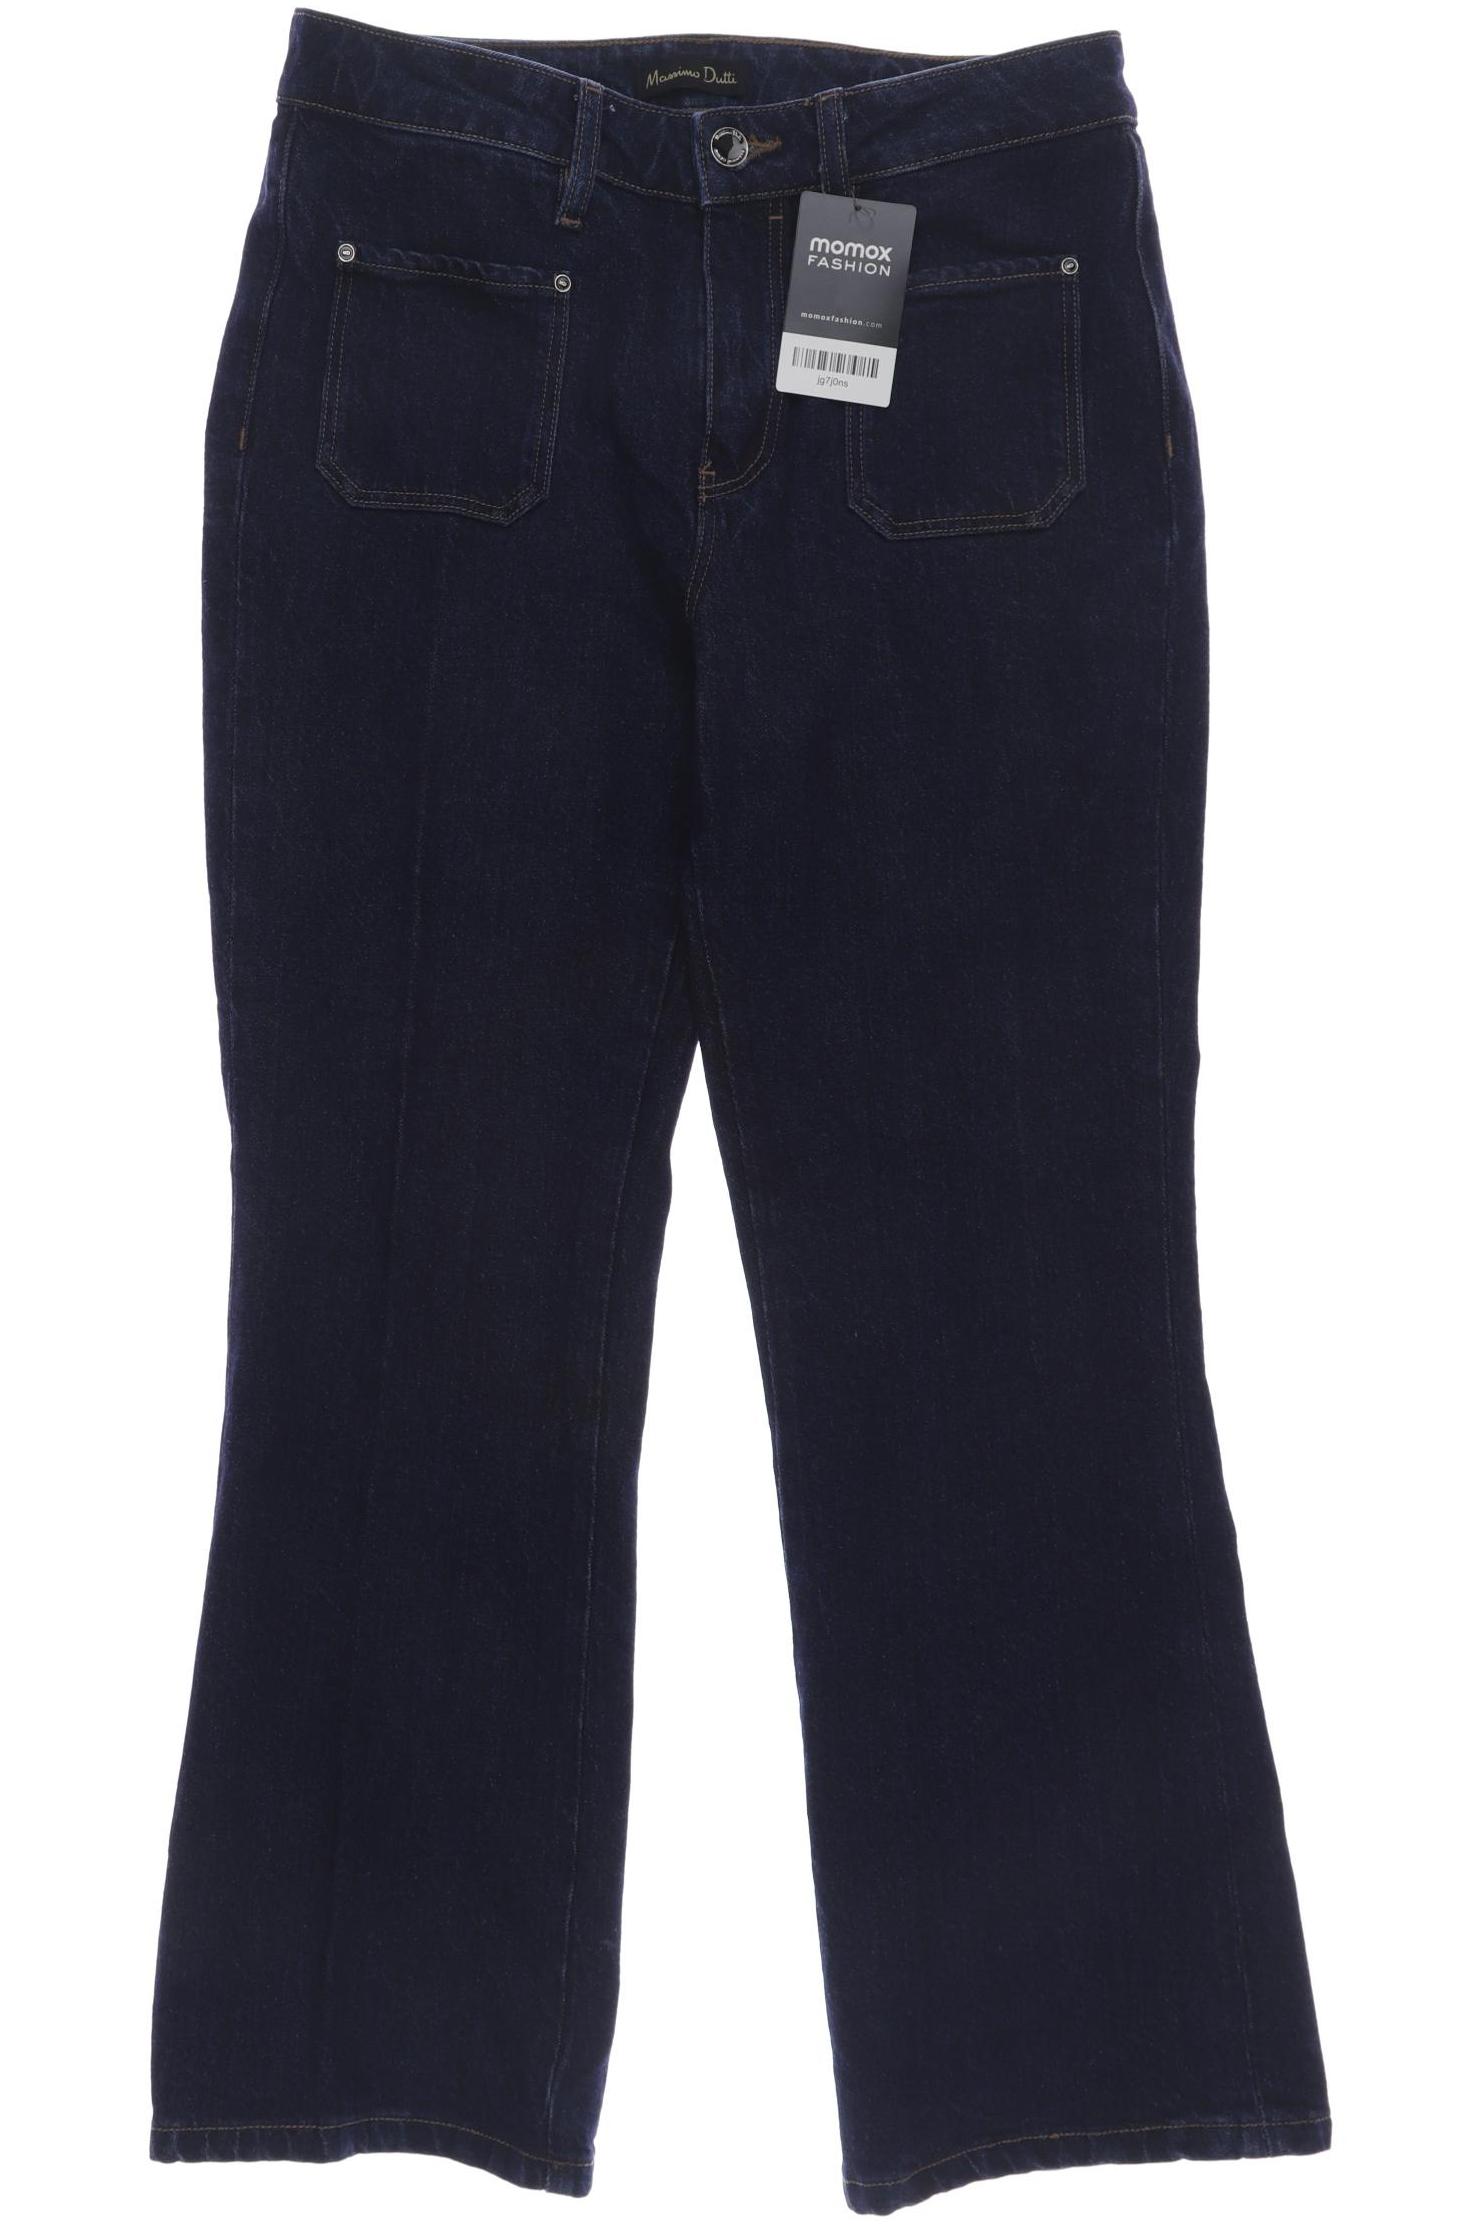 Massimo Dutti Damen Jeans, marineblau von Massimo Dutti